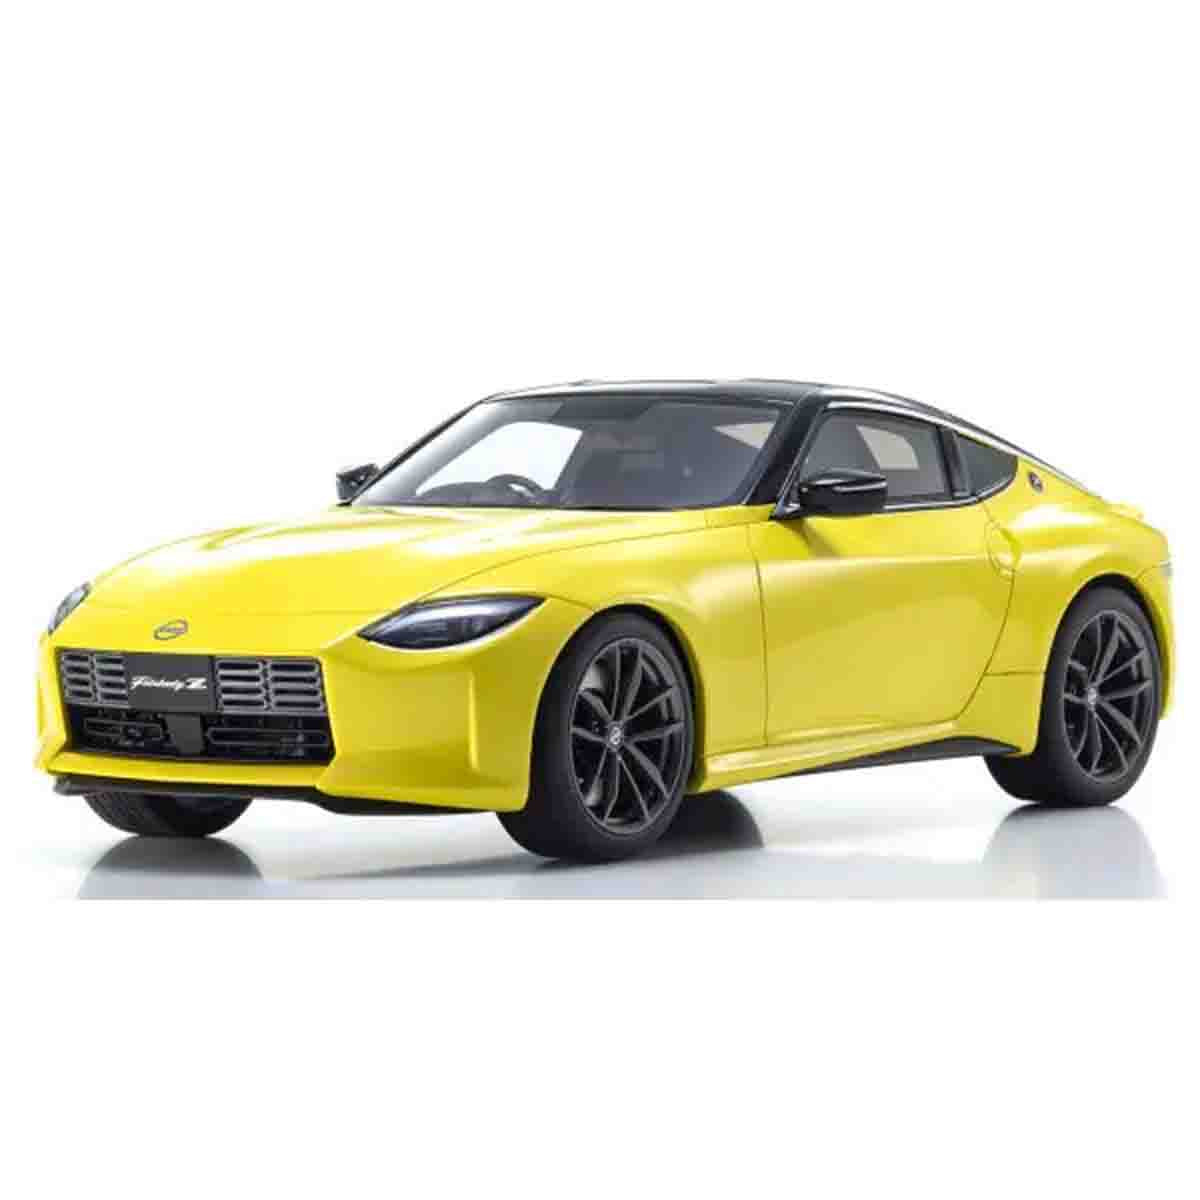 Nissan Fairlady Z Yellow / Black - 1:18 Scale Resin Model Car